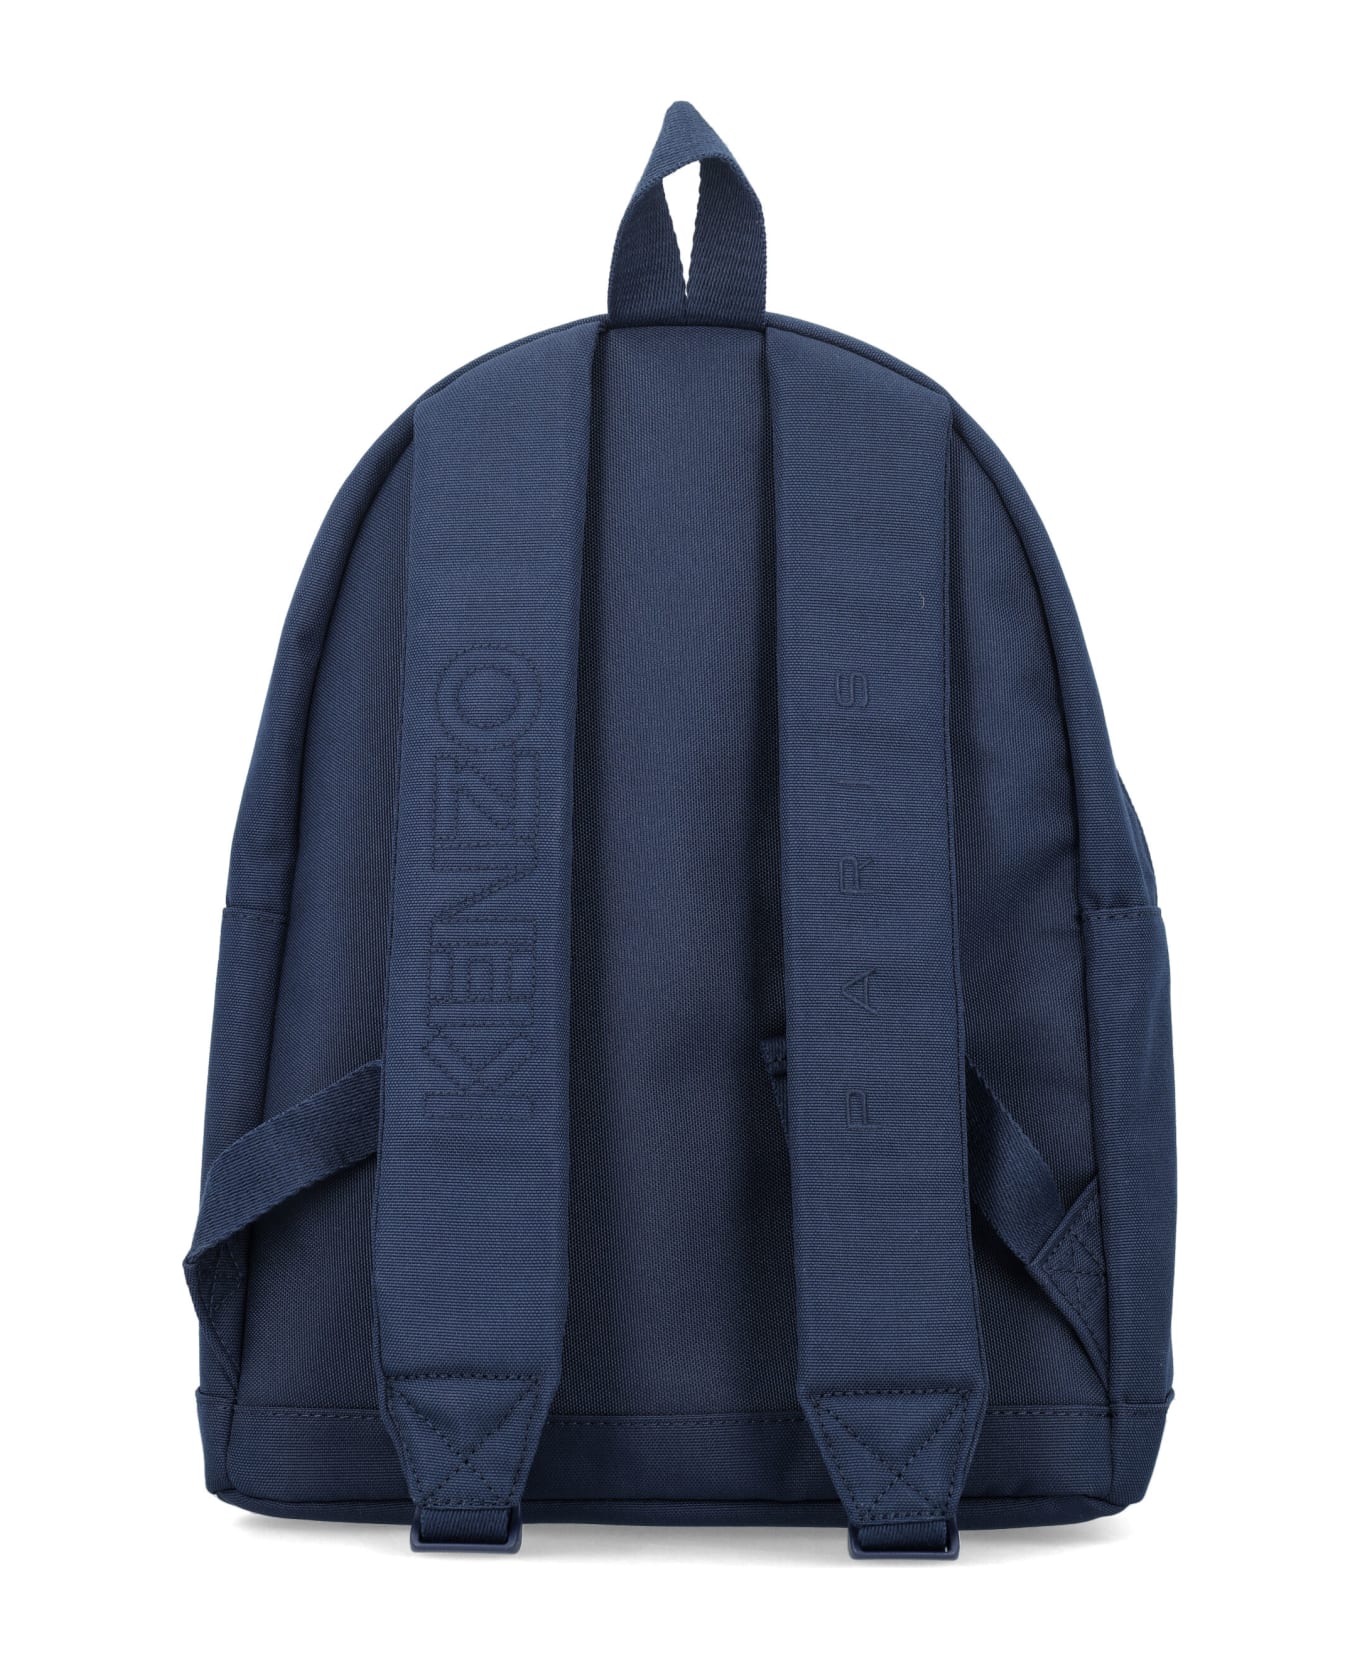 Kenzo Kids Logo Canvas Backpack - NAVY アクセサリー＆ギフト